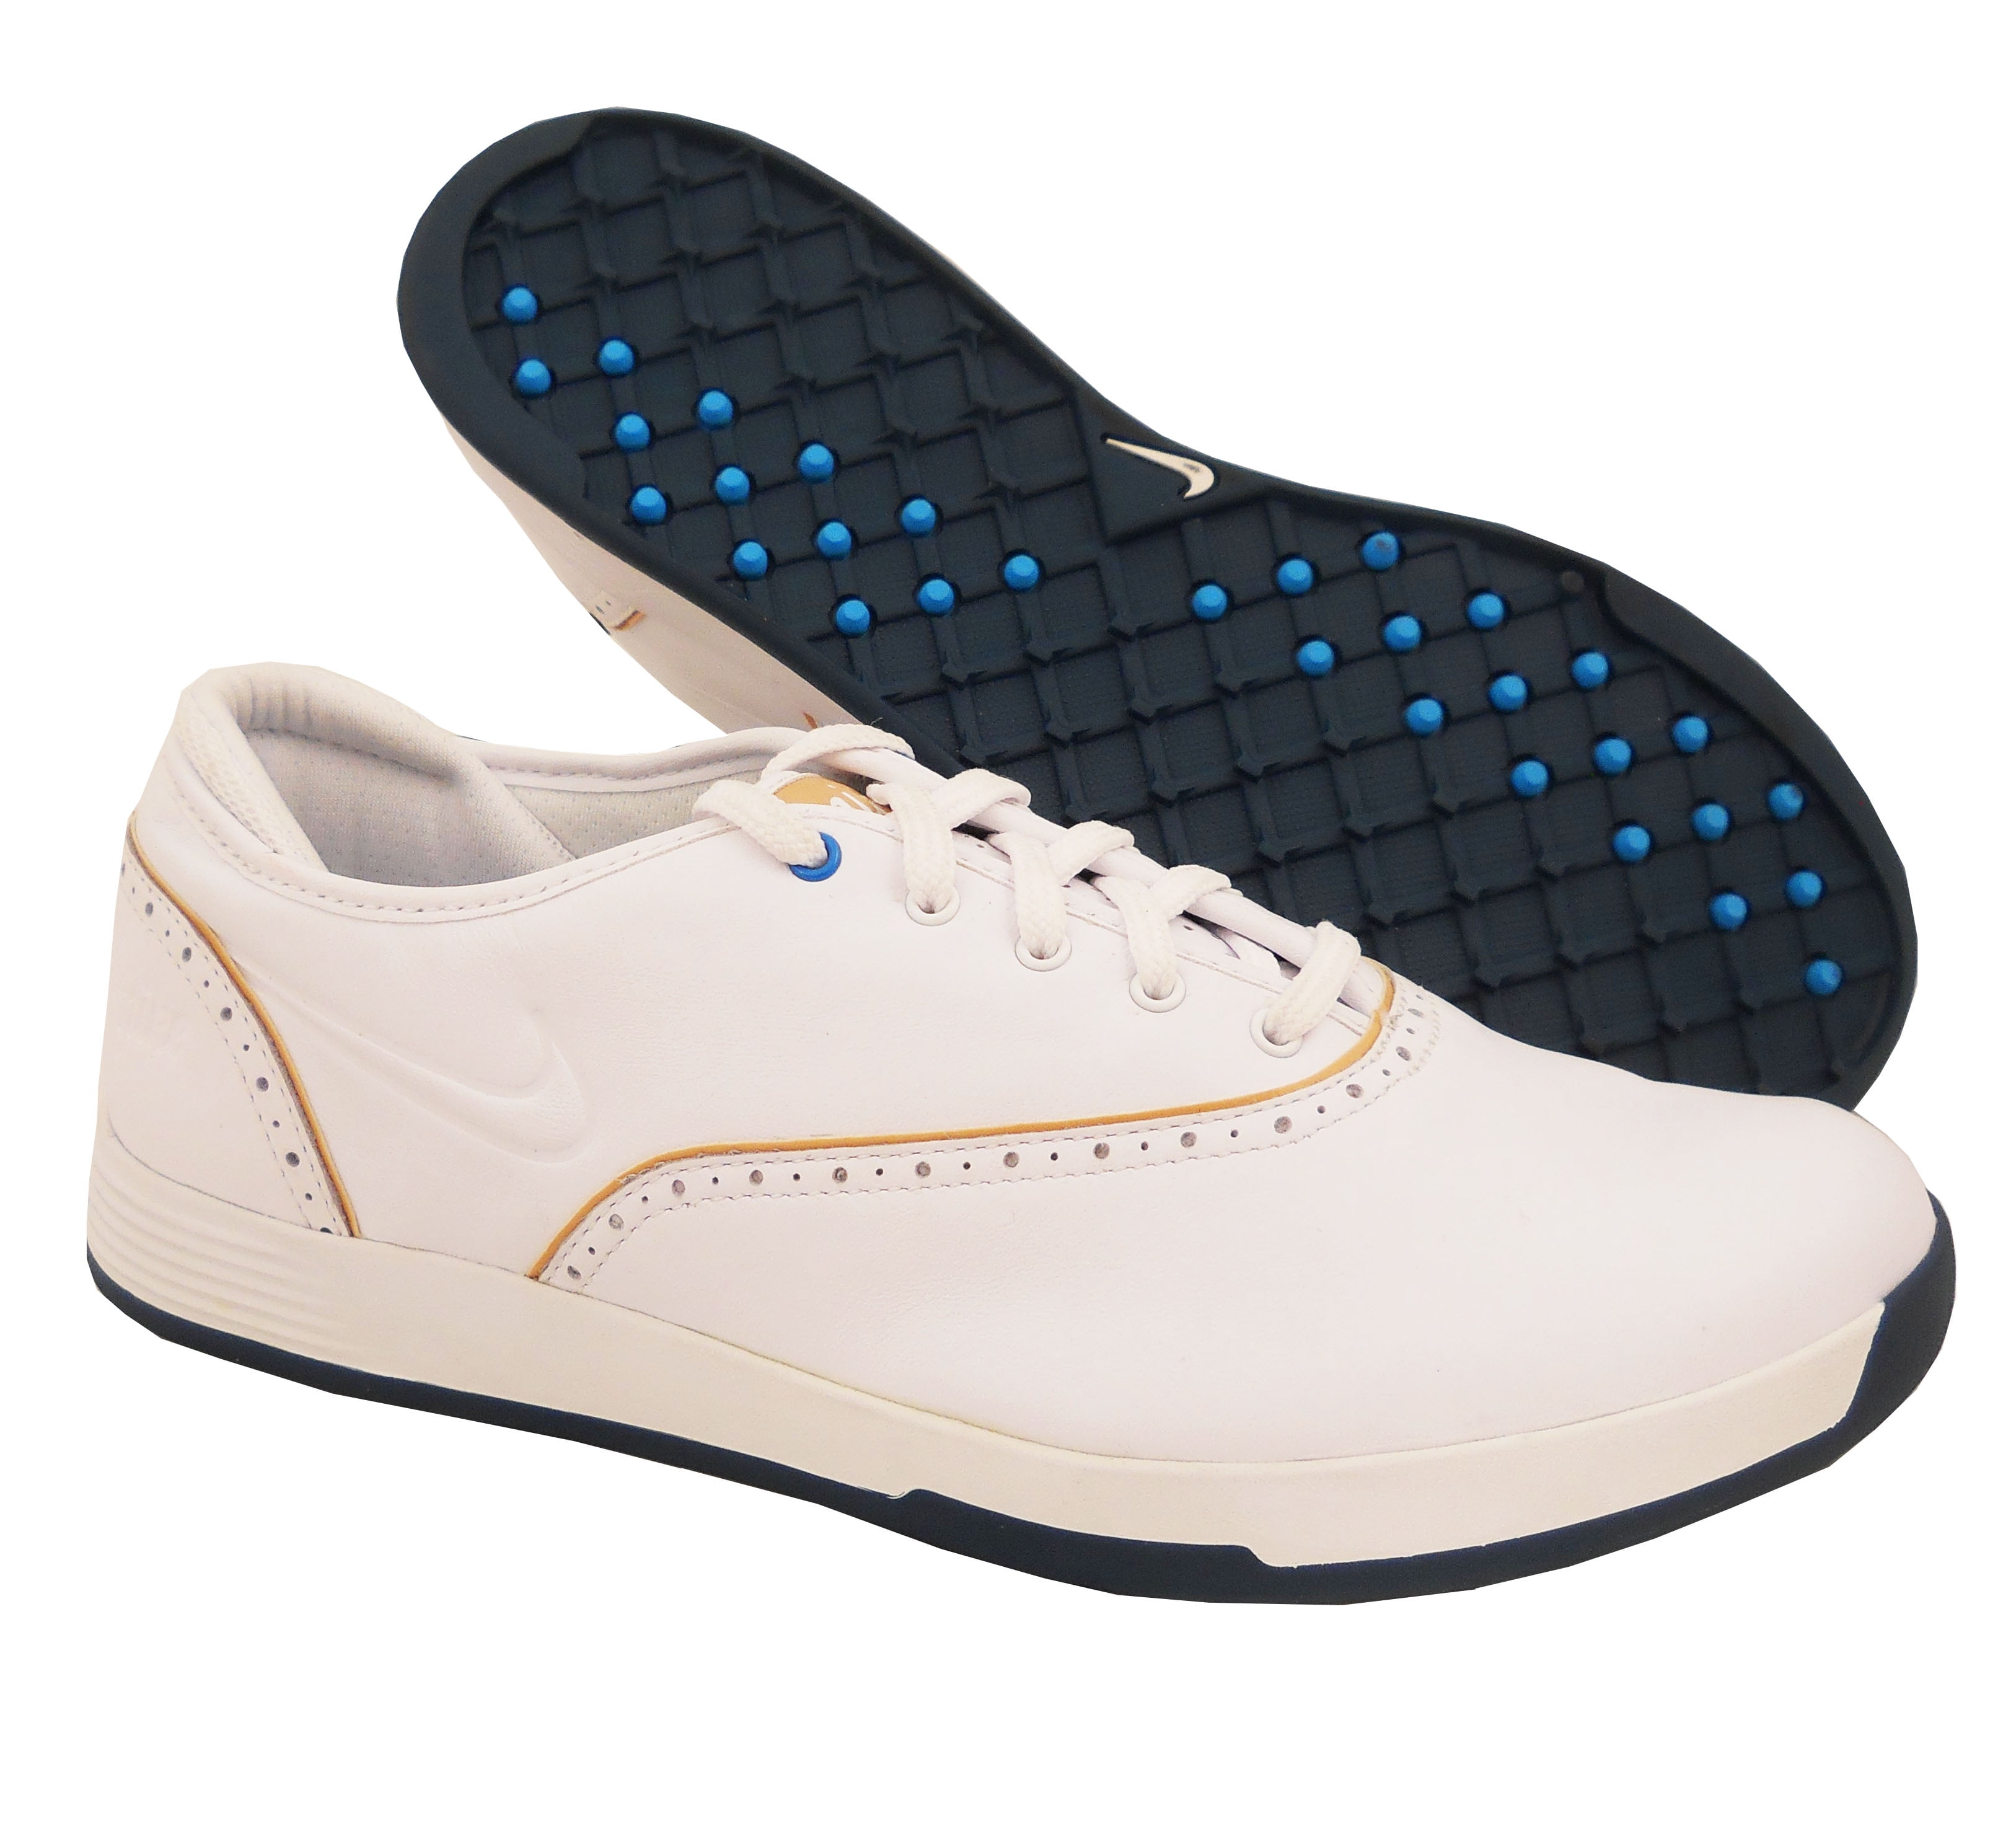 New Womens Nike Lunar Duet Classic Golf Shoes White/Tan 10 W - Ret $99 ...